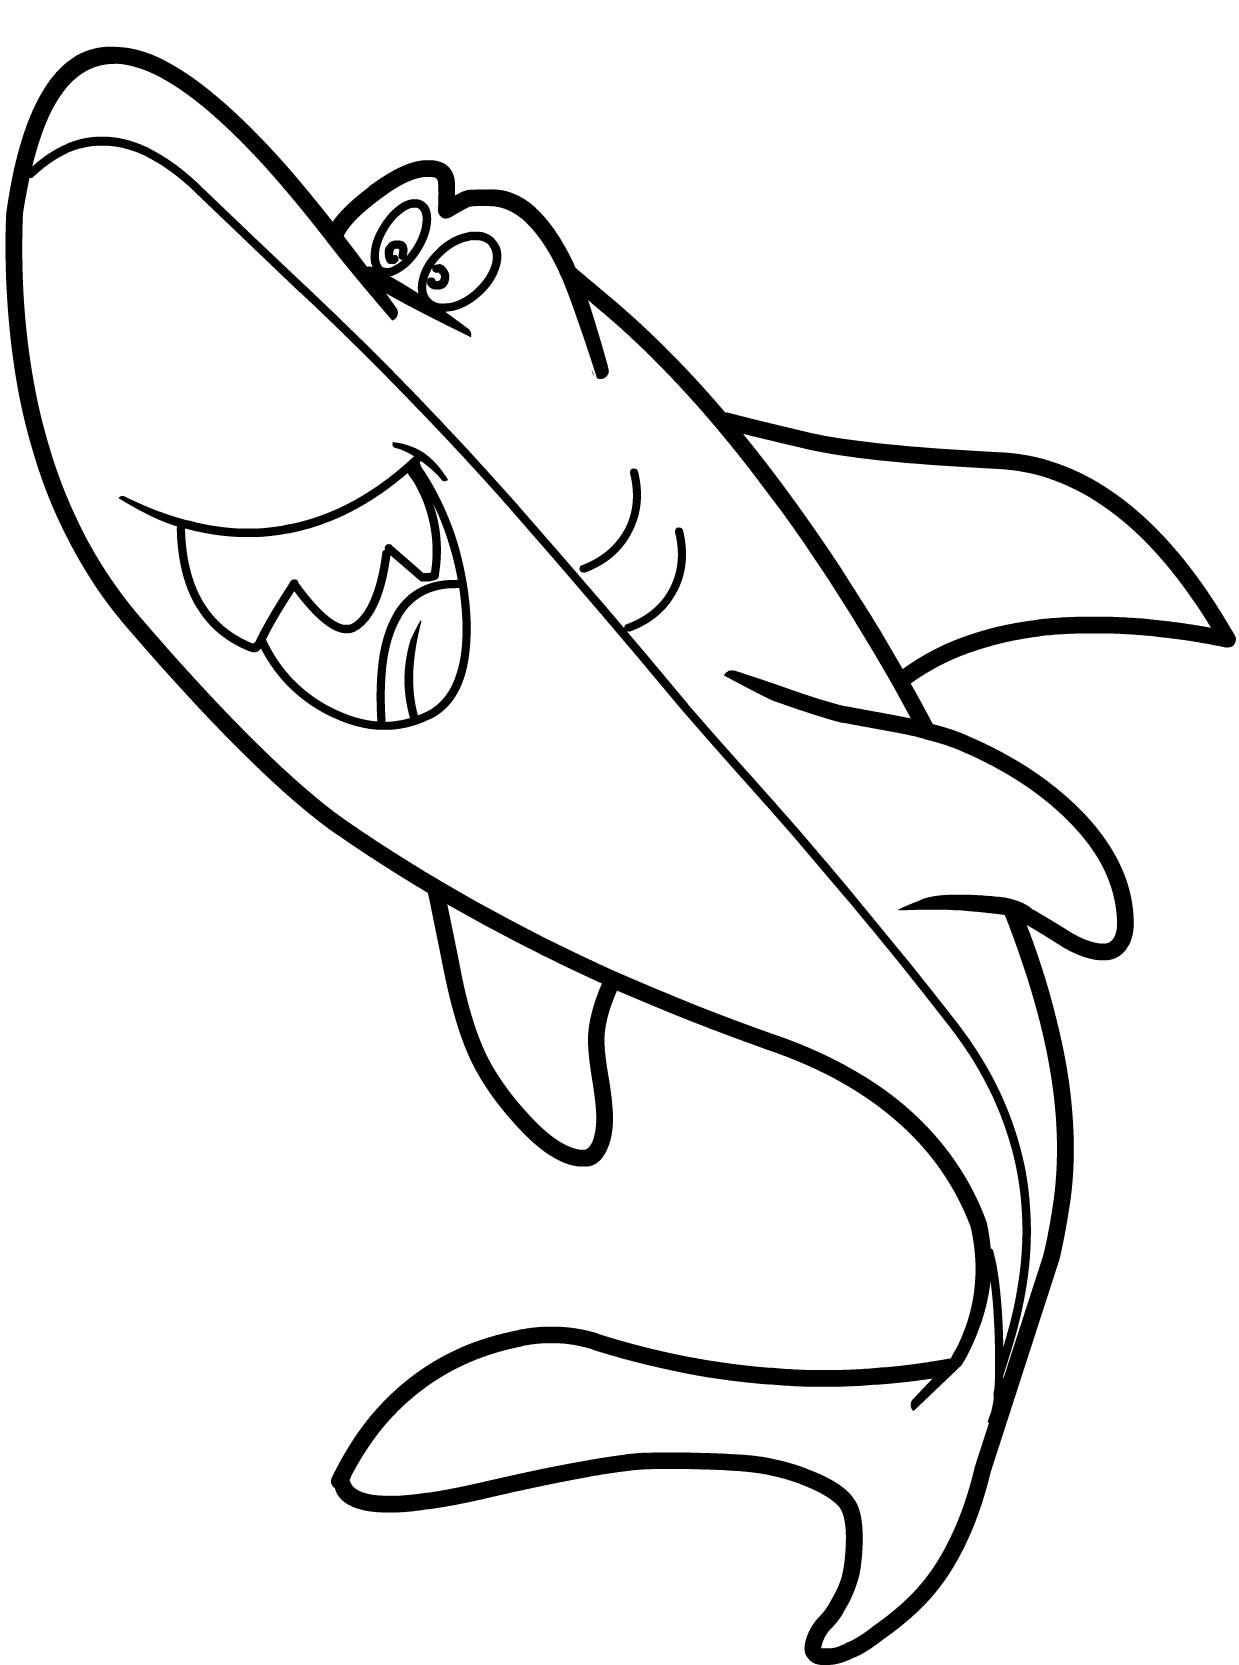 Cute Shark Drawing - ClipArt Best